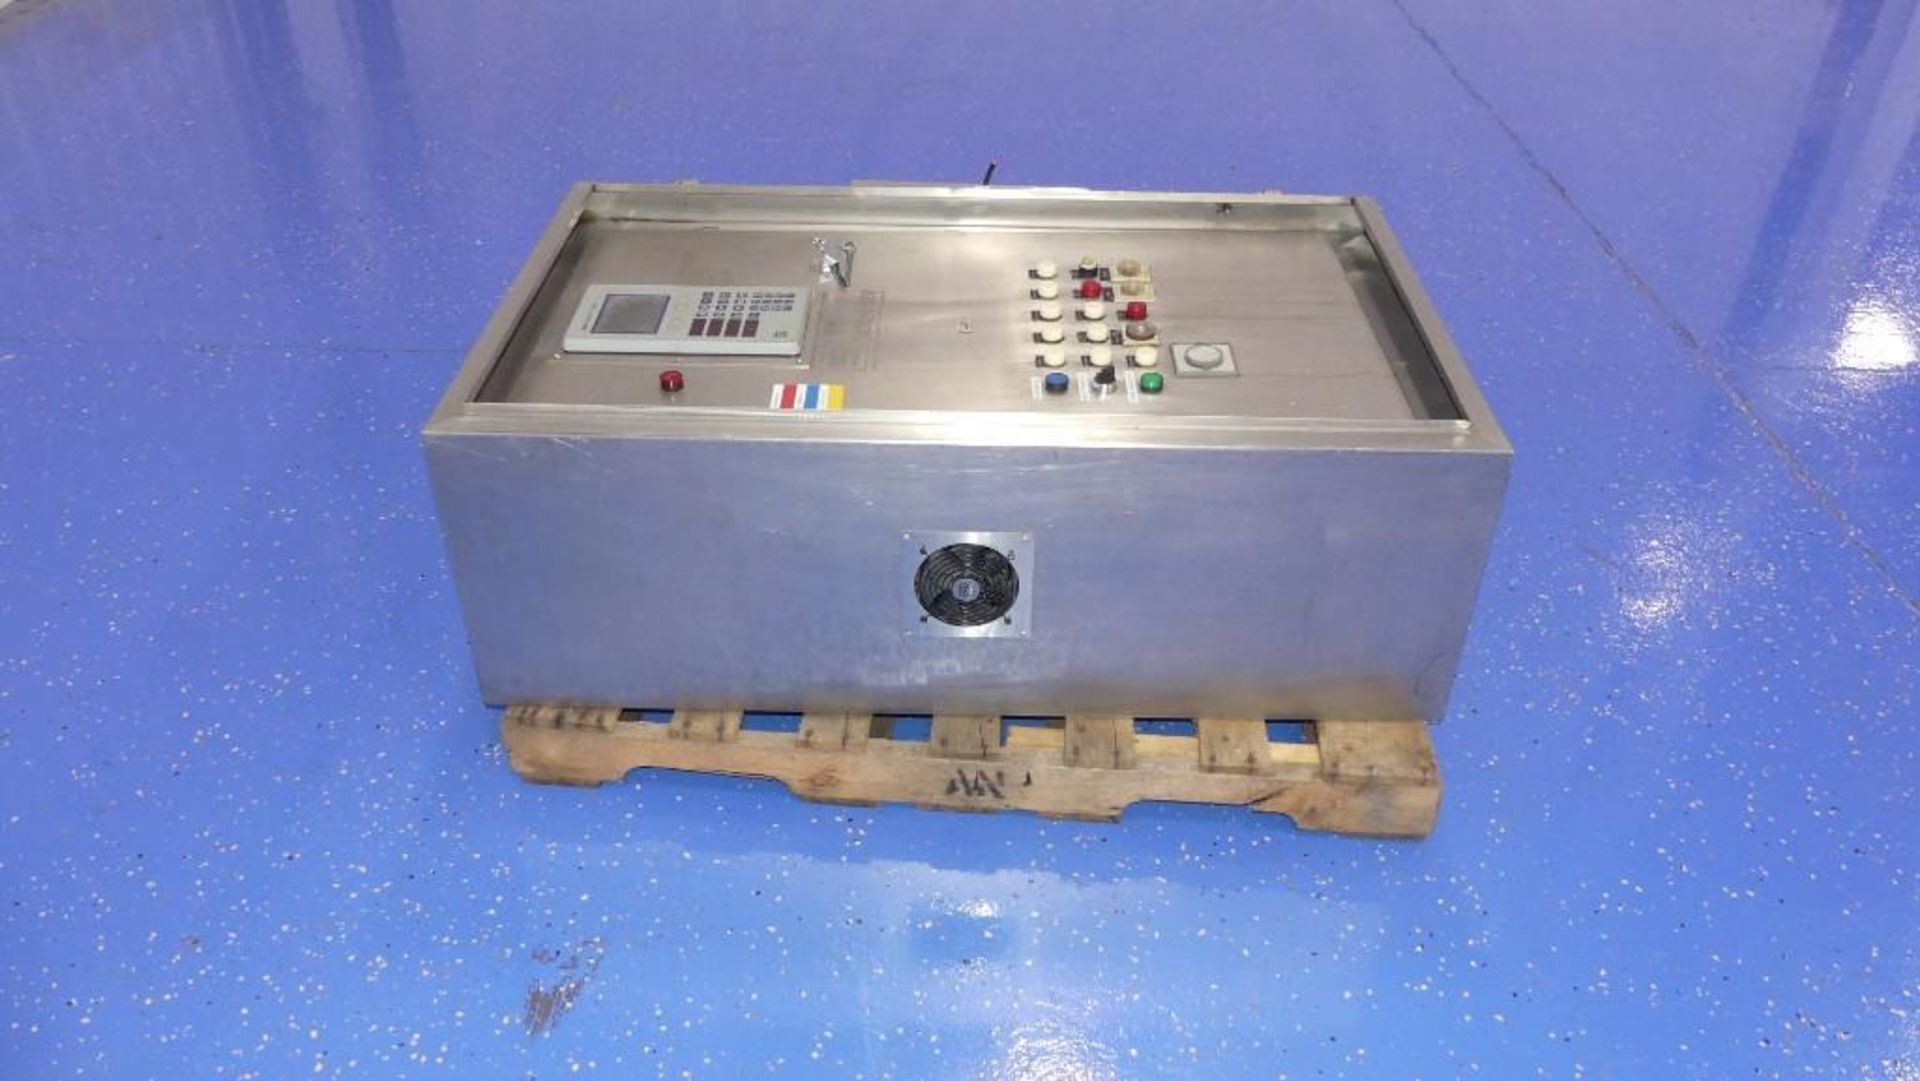 Jumo Imago F3000 Control Box